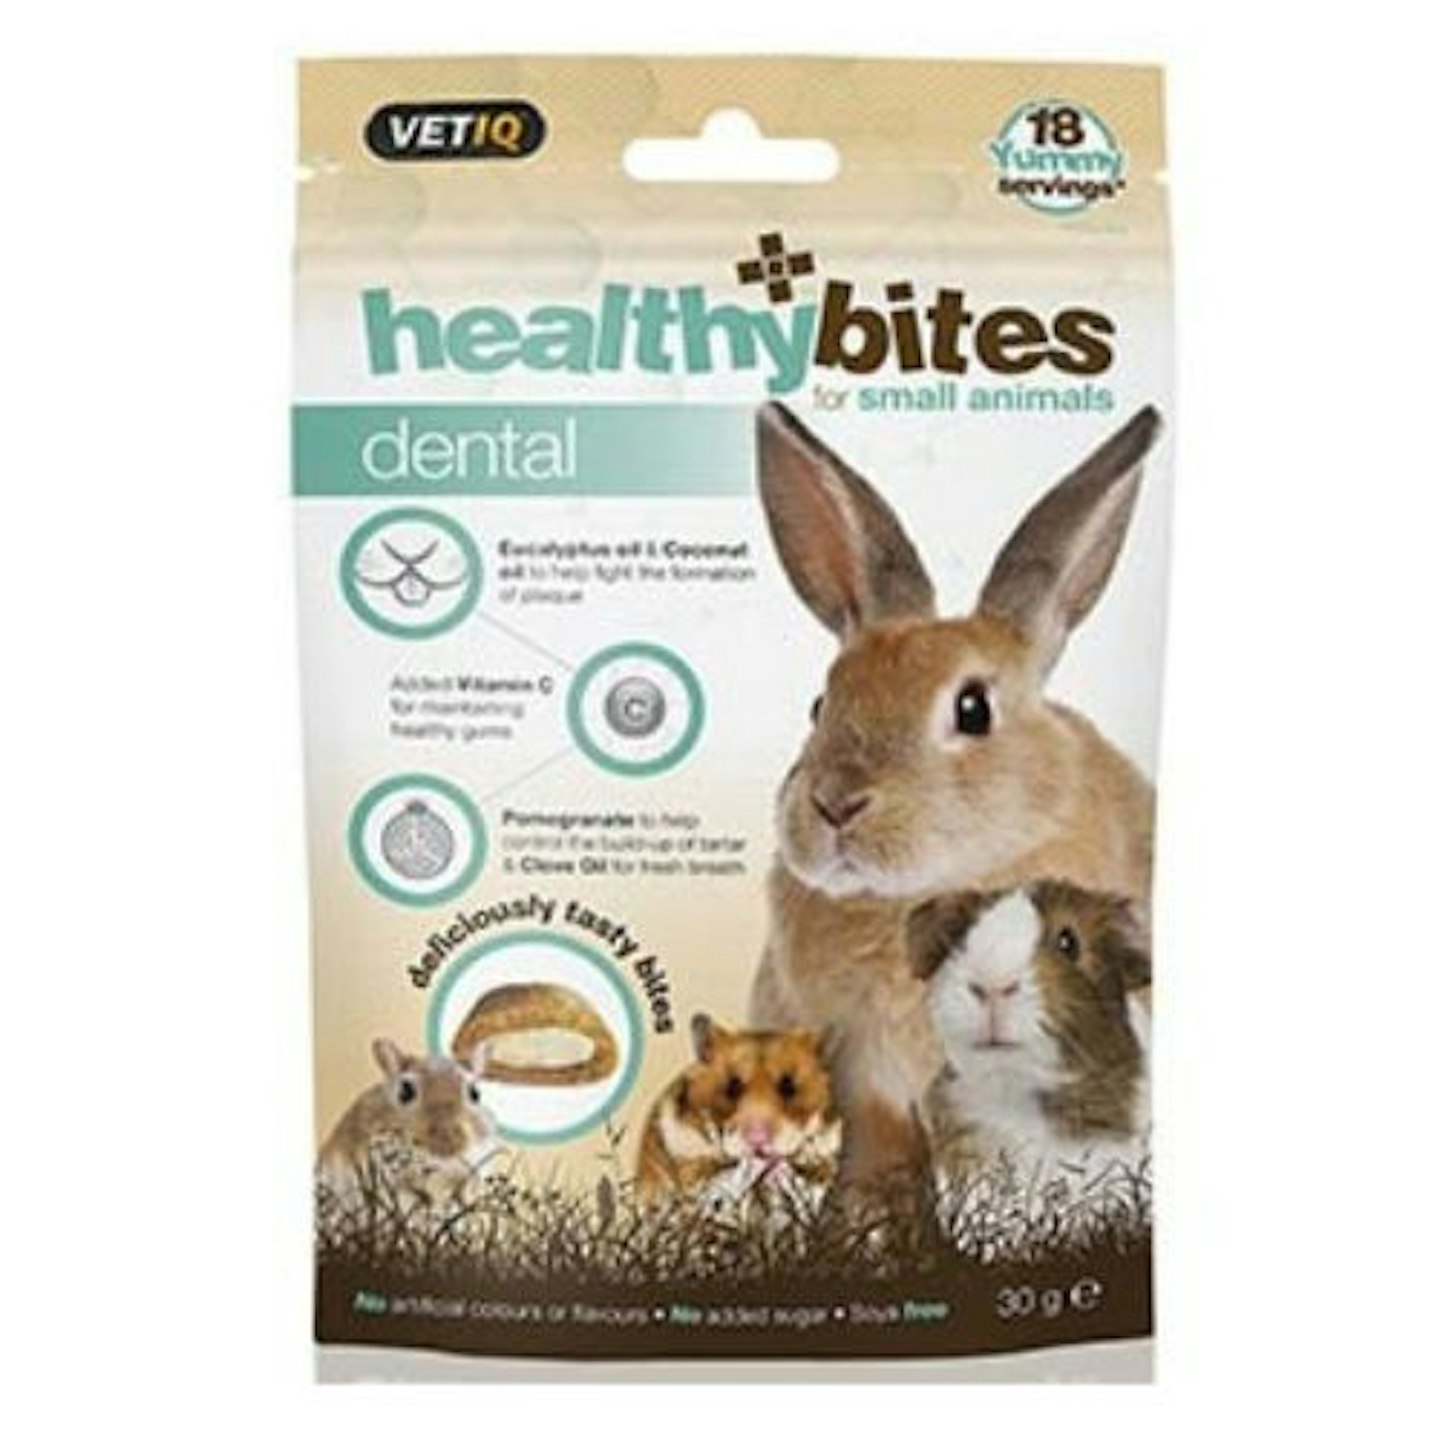 VetIQ Healthy Bites Dental Treats for Small Animals